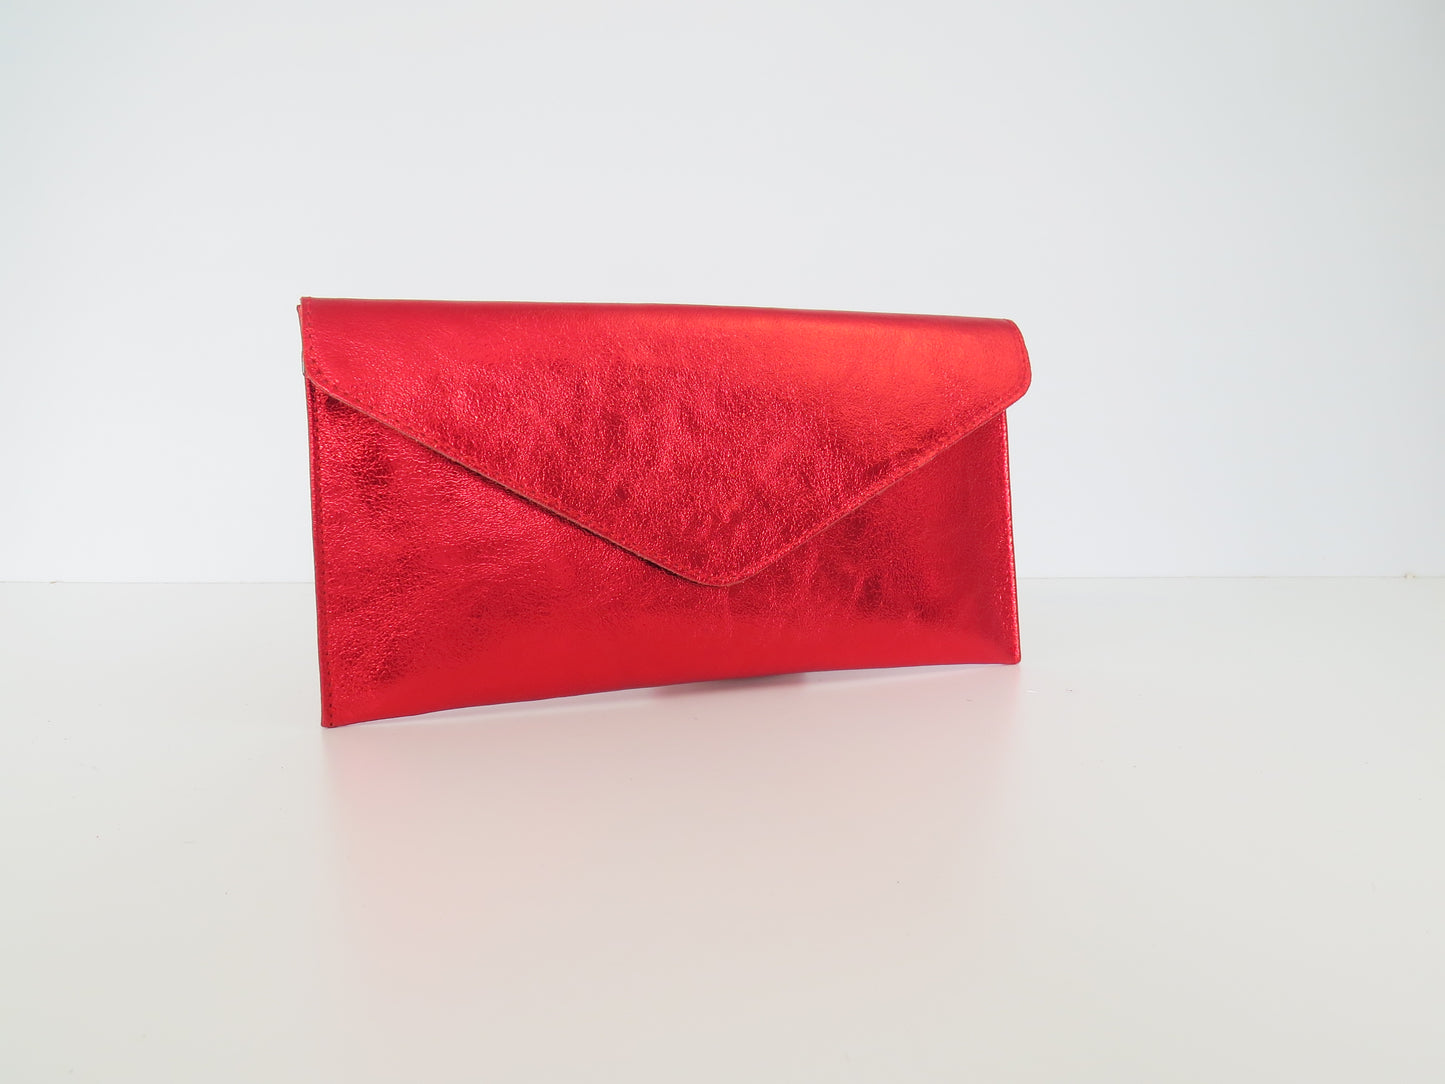 Metallic Scarlet Red Envelope Clutch Bag